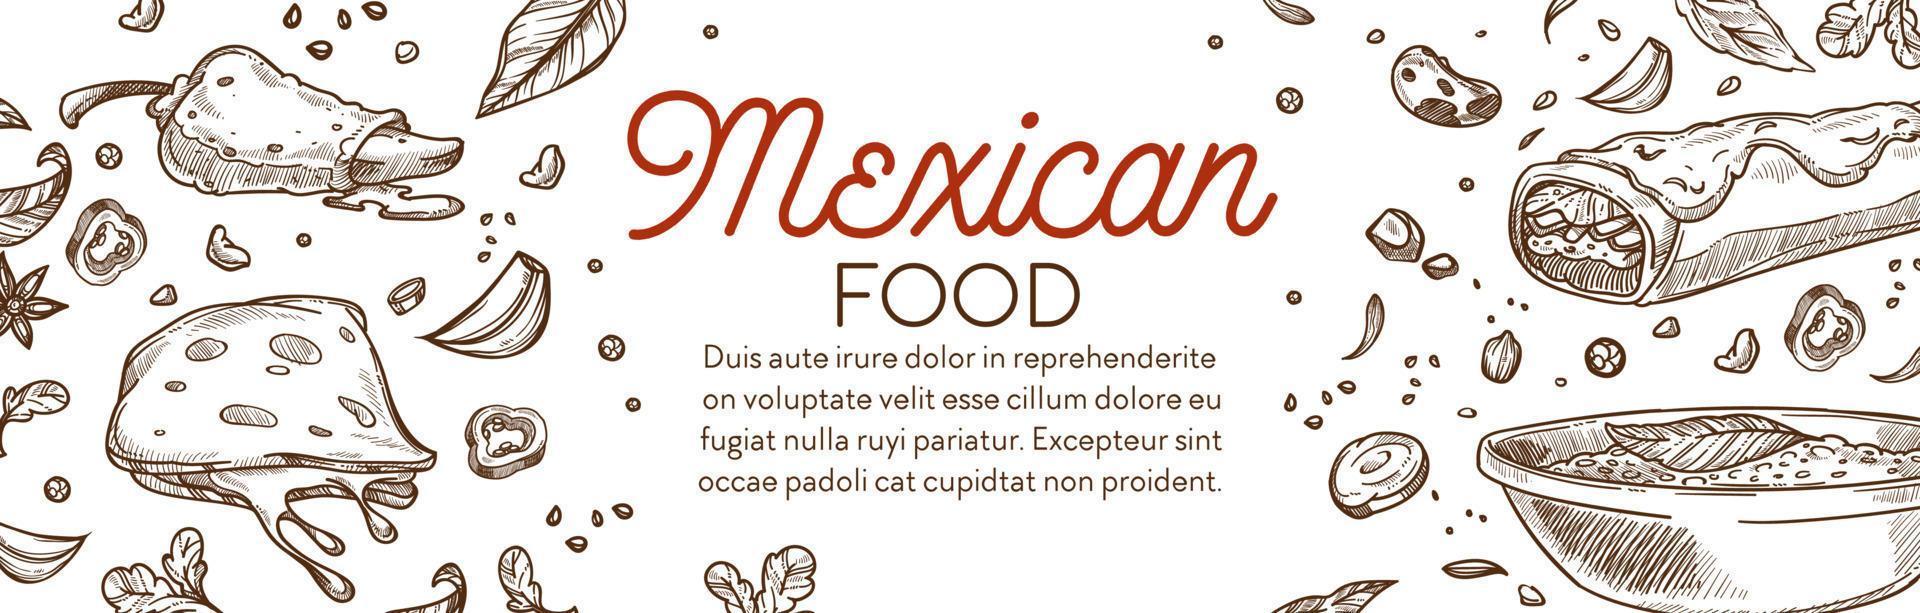 menú monocromo de comida mexicana con vector de platos